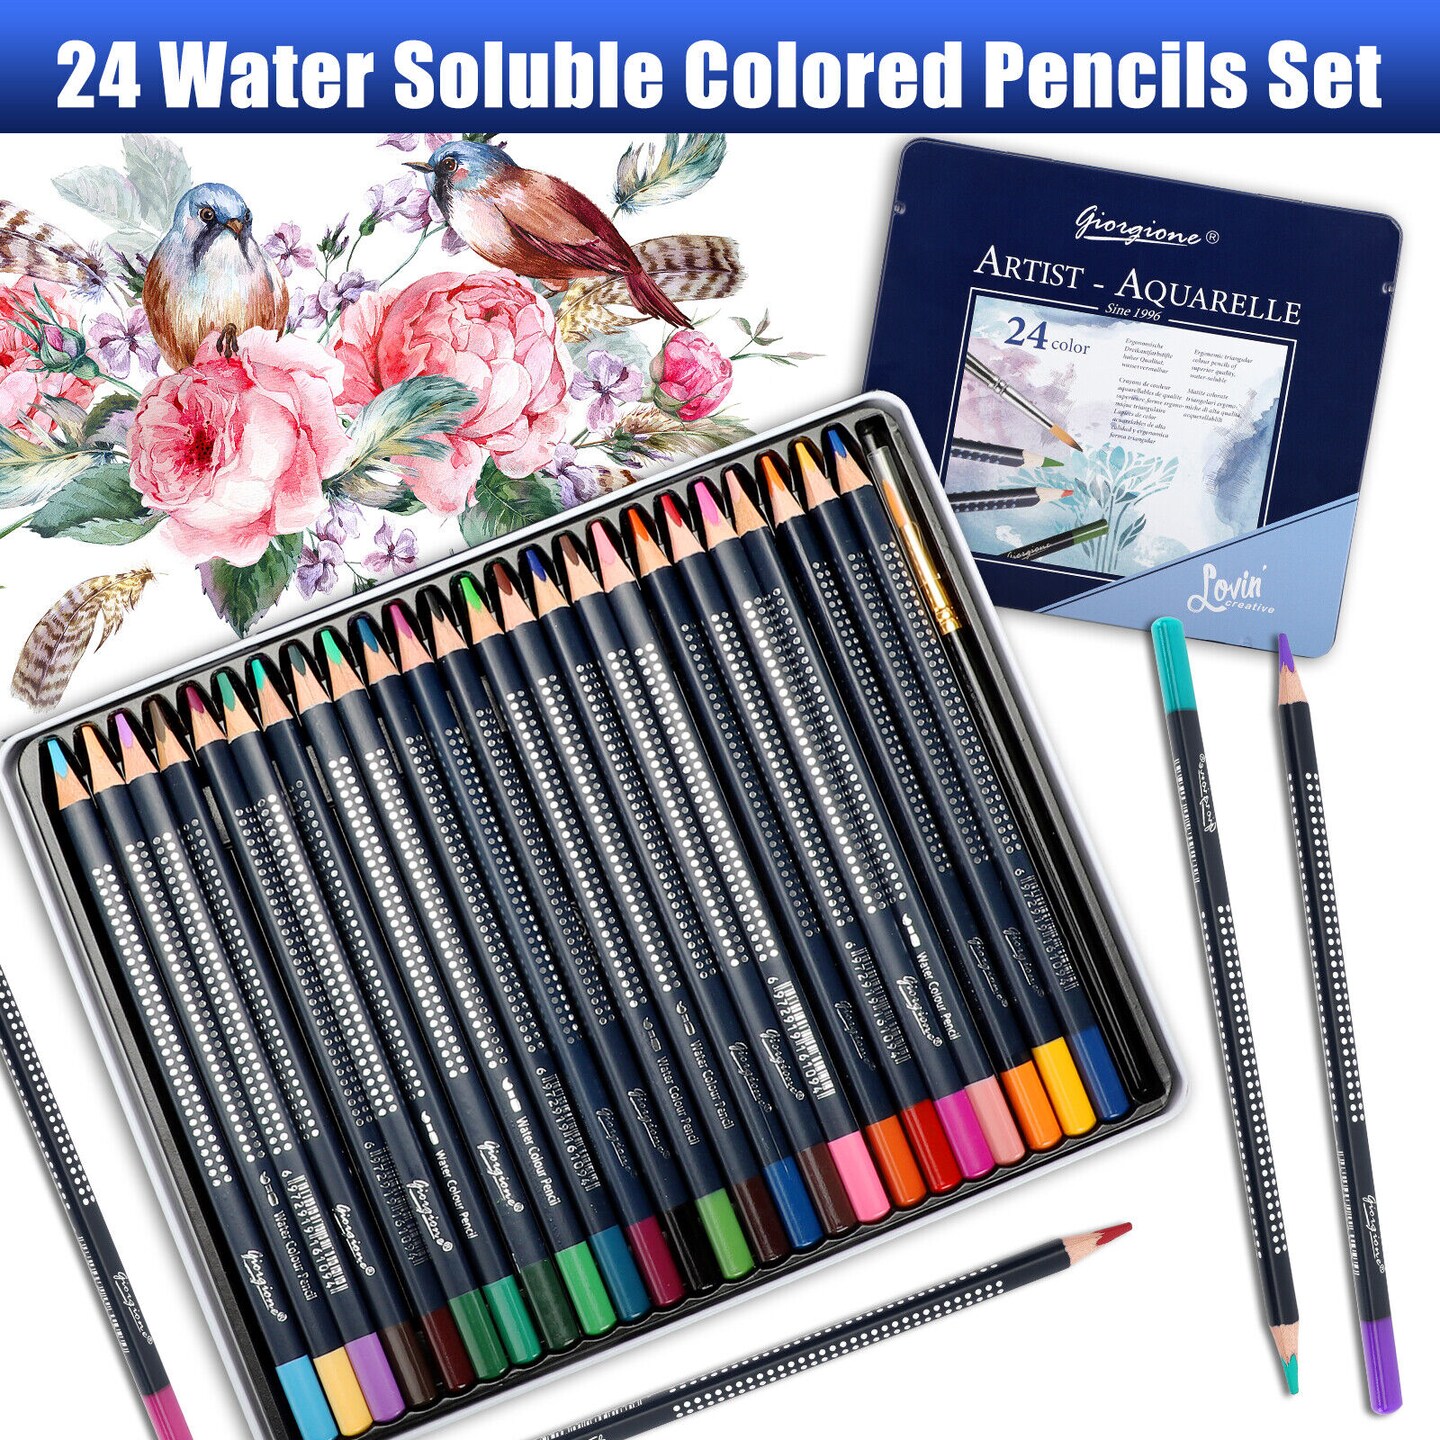  Tavolozza Premium 160 Colored Pencils, Art Supplies